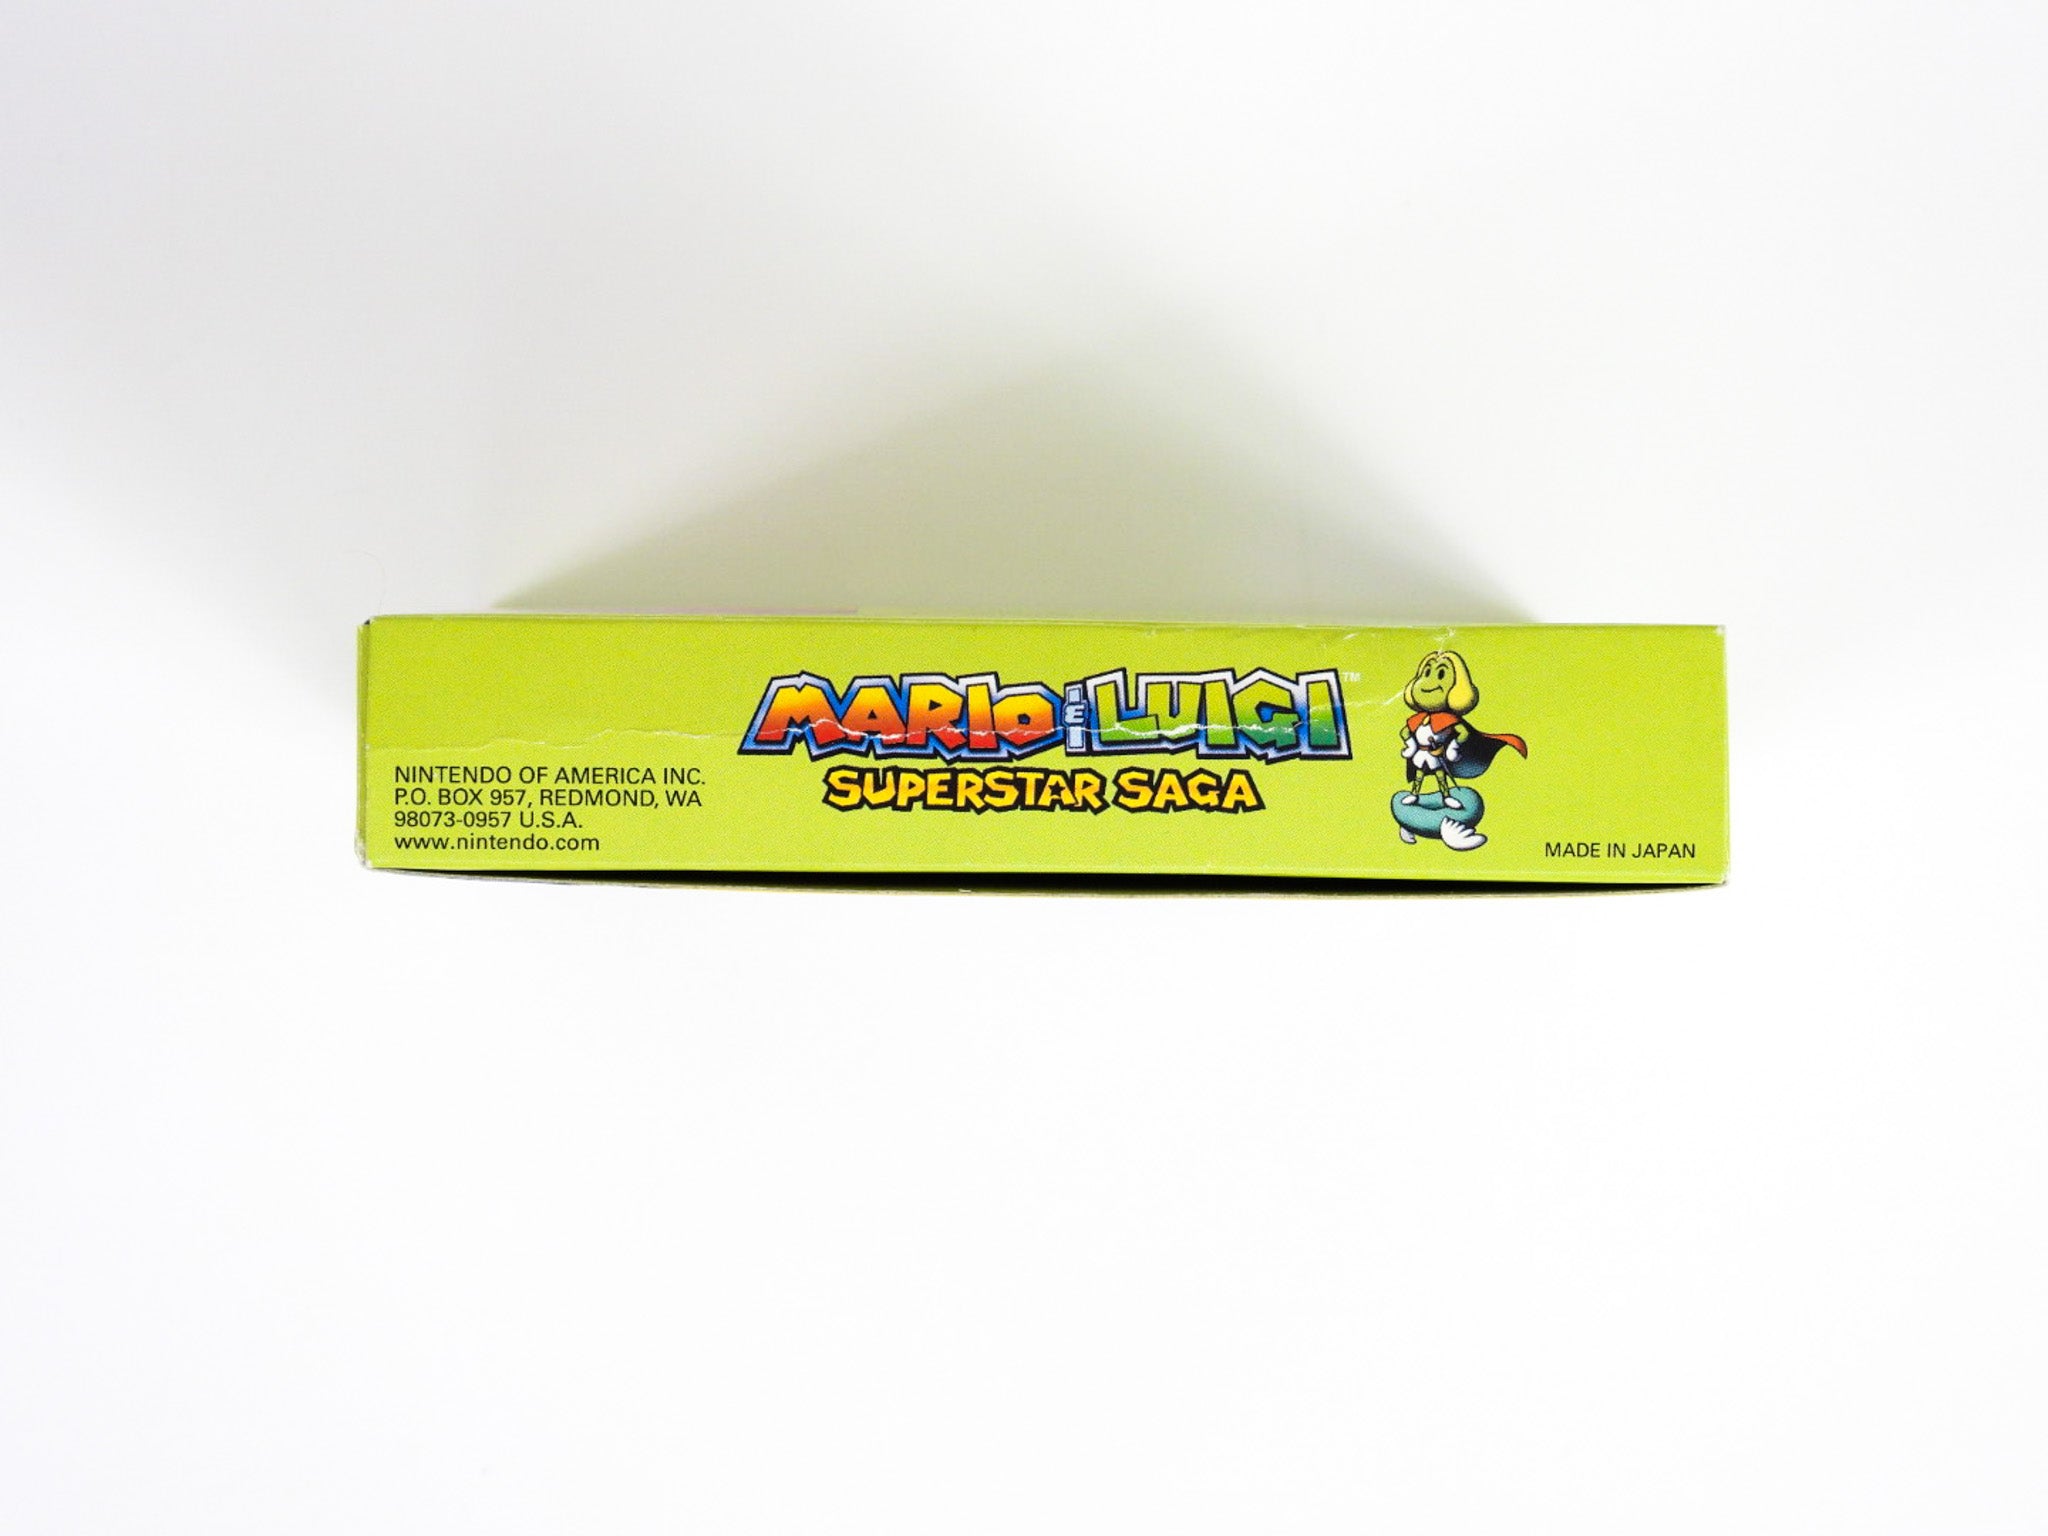 Complete Mario & Luigi Superstar Saga Player's Choice - GameBoy Advance